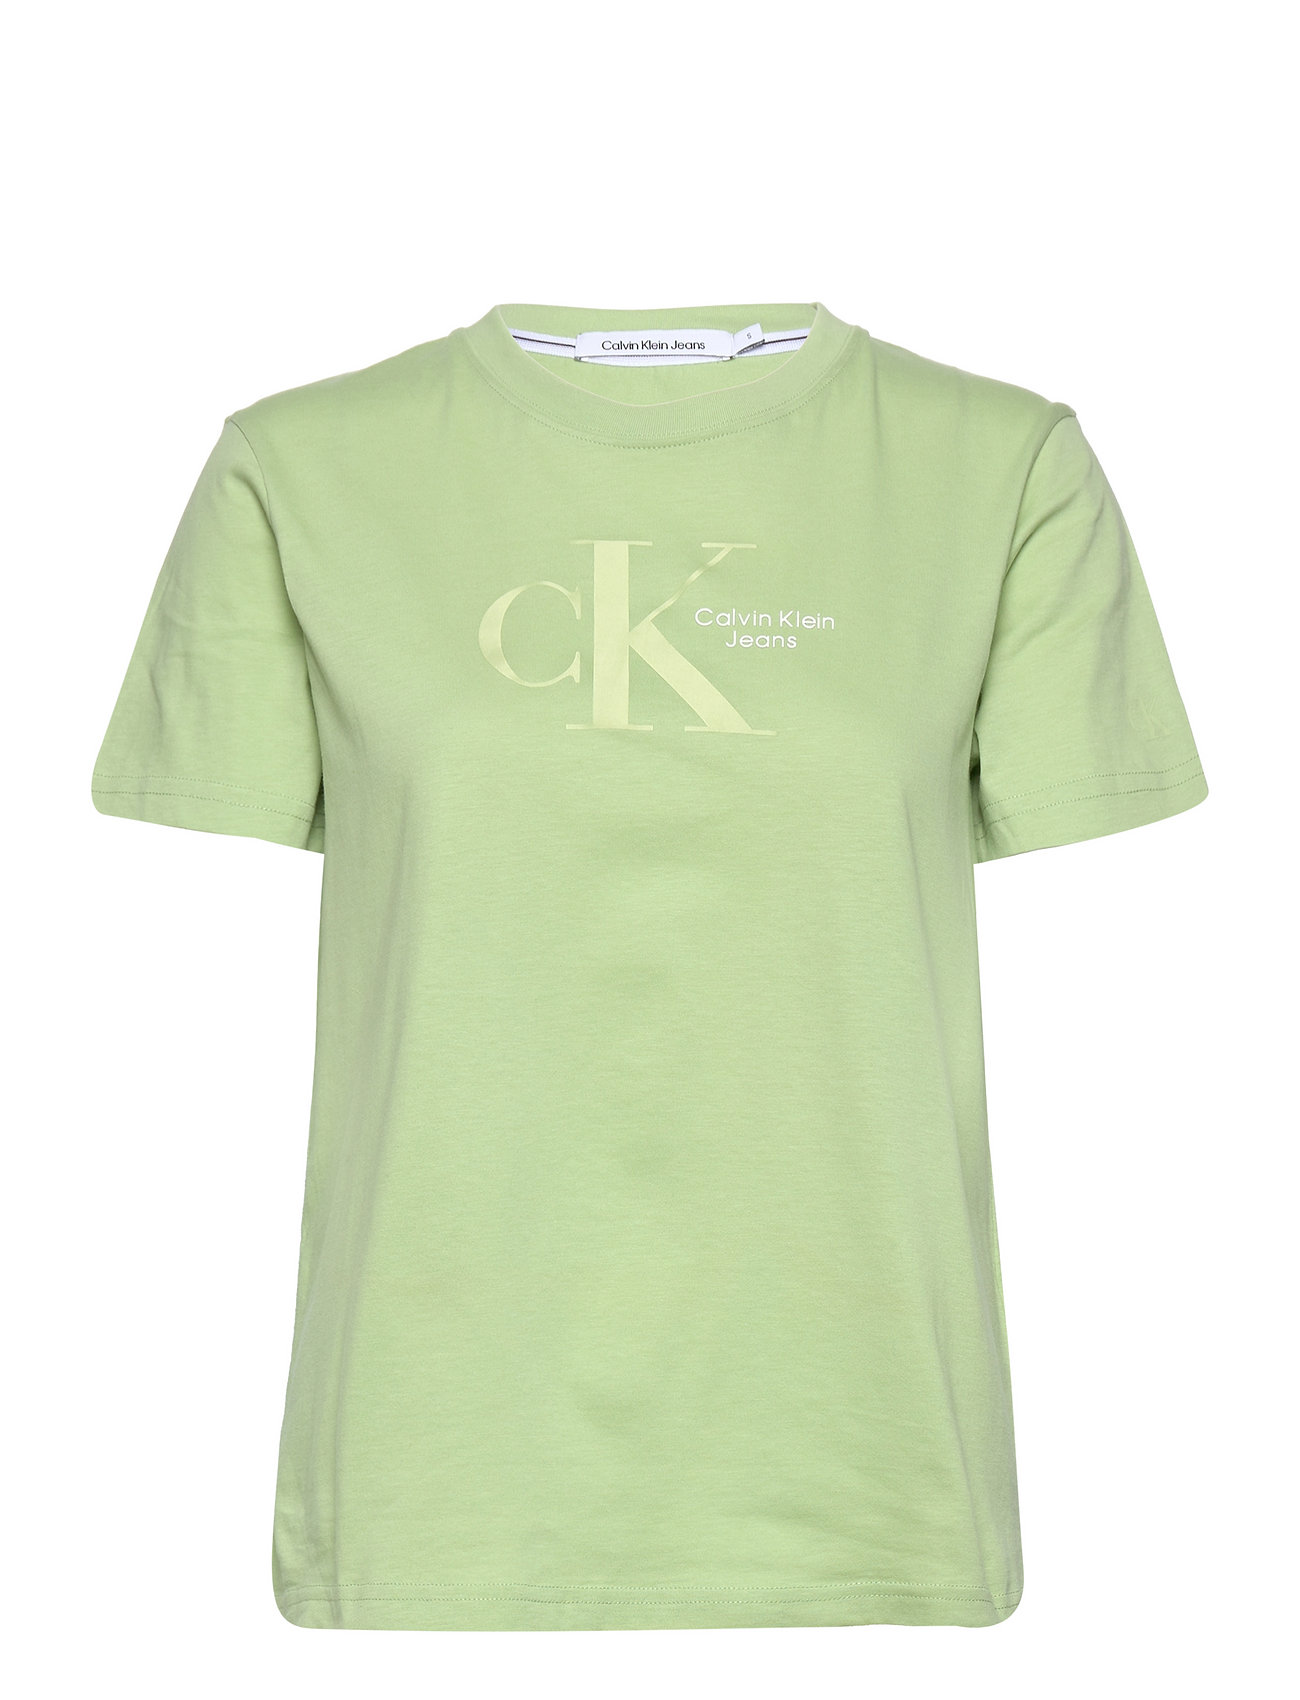 Dynamic Ck Tee T-shirts & Tops Short-sleeved Grön Calvin Klein Jeans